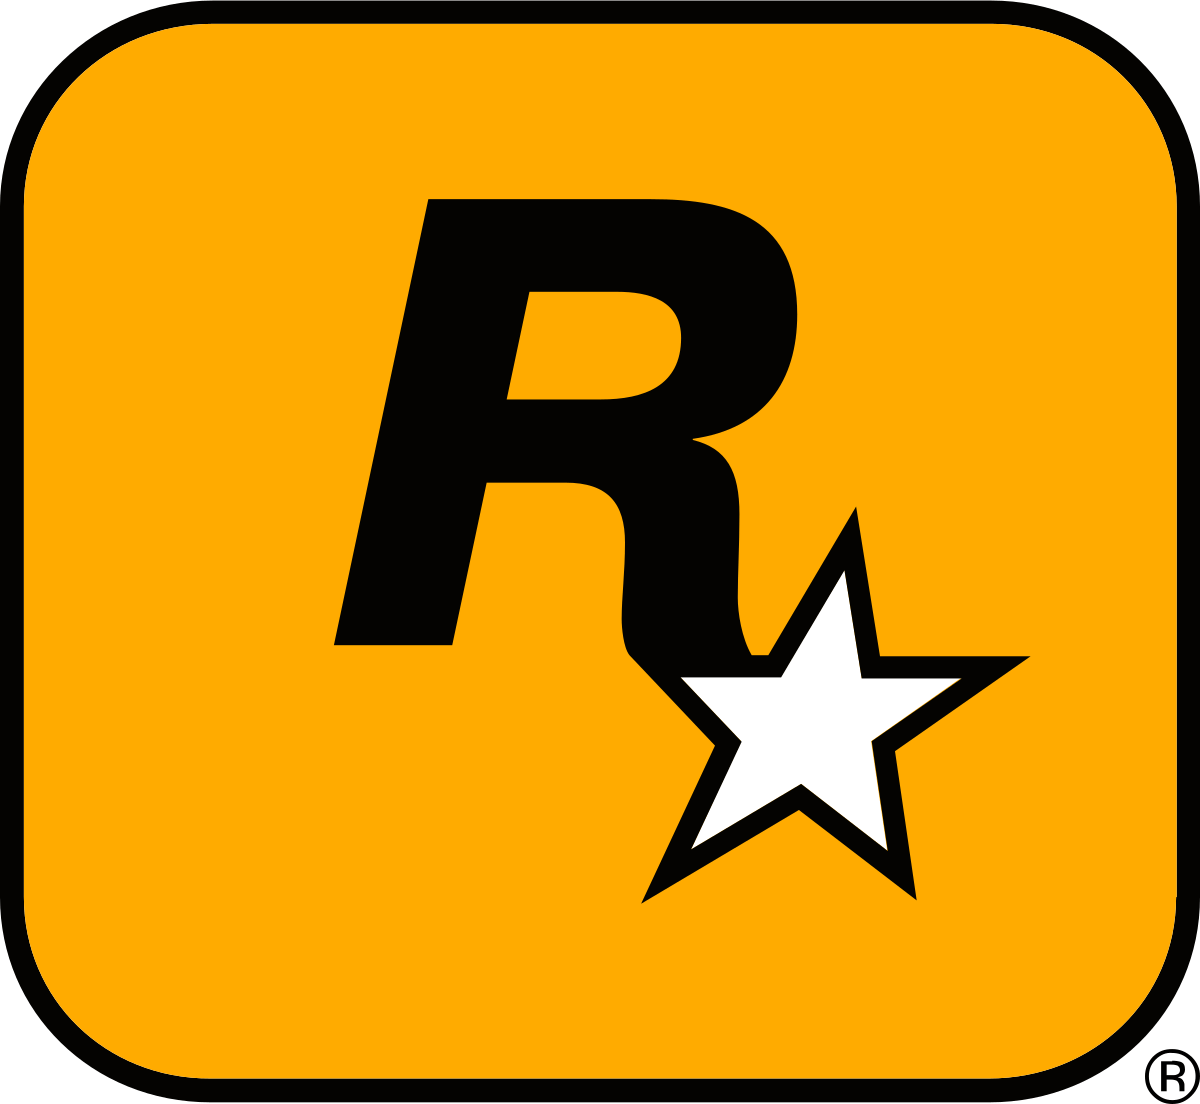 Google Games Logo - Rockstar Games